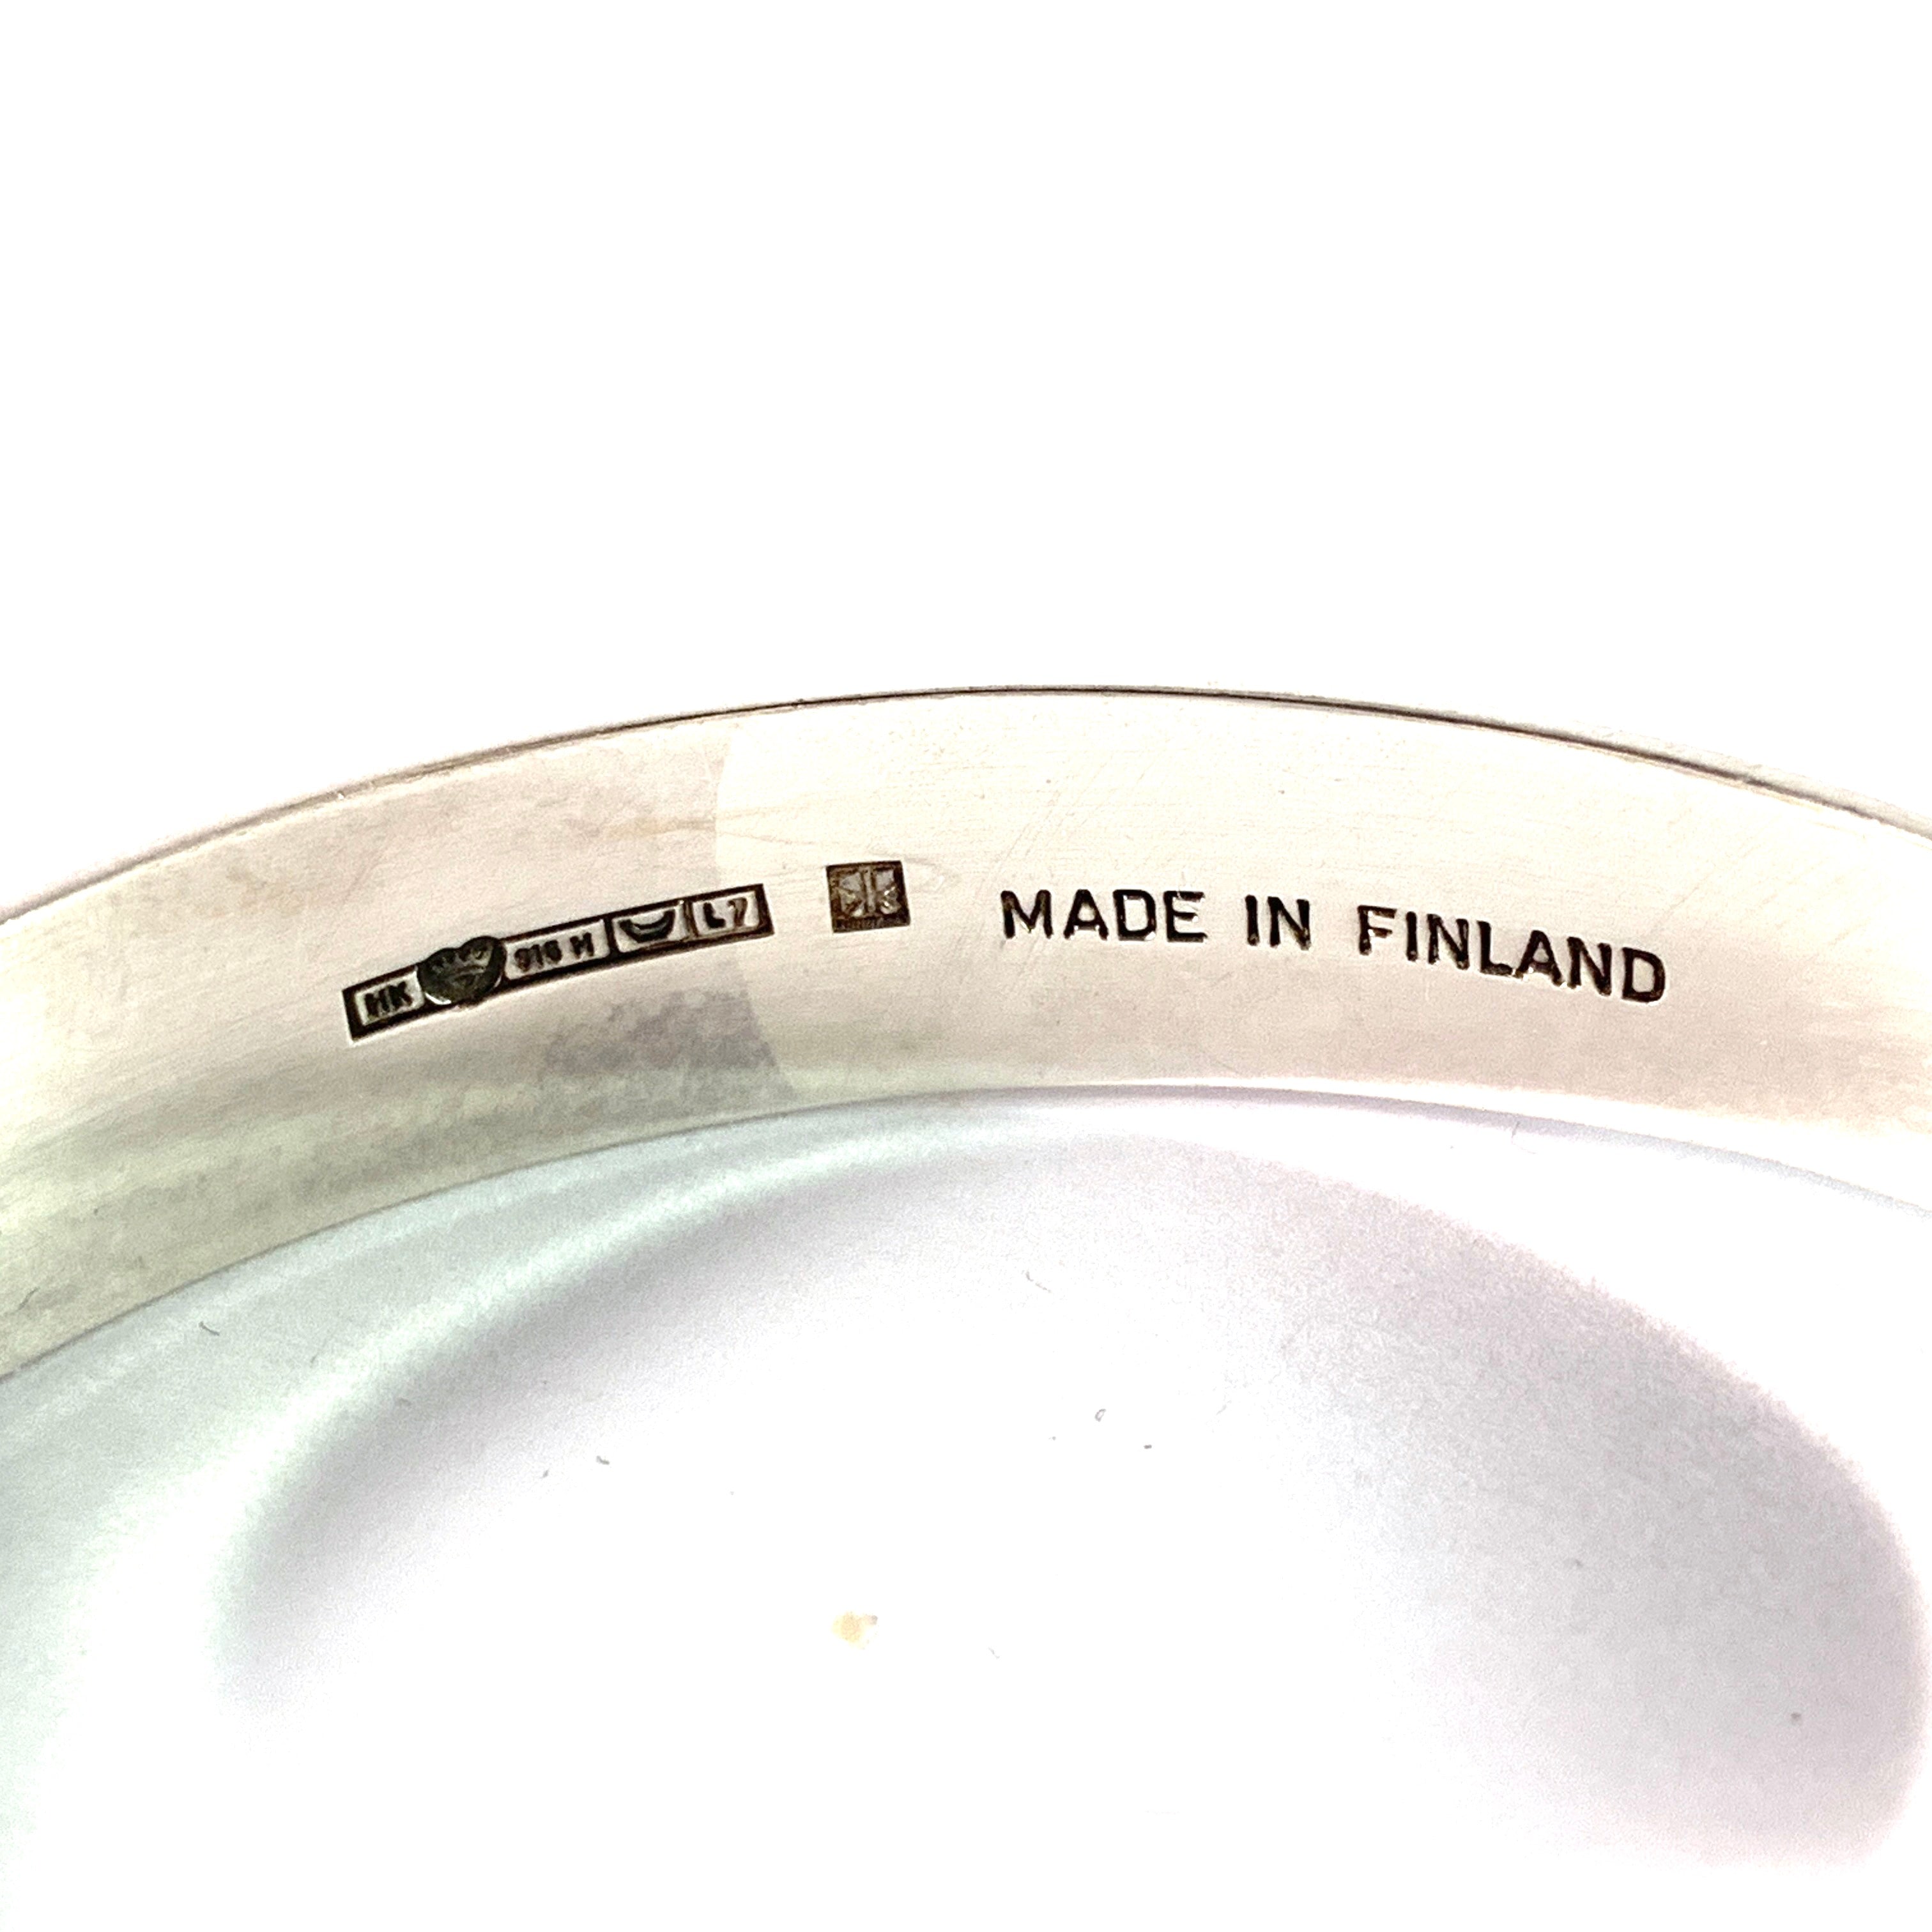 H.Kaksonen for Kaunis Koru Finland 1964 Vinage Solid Silver Rose Quartz Bracelet.